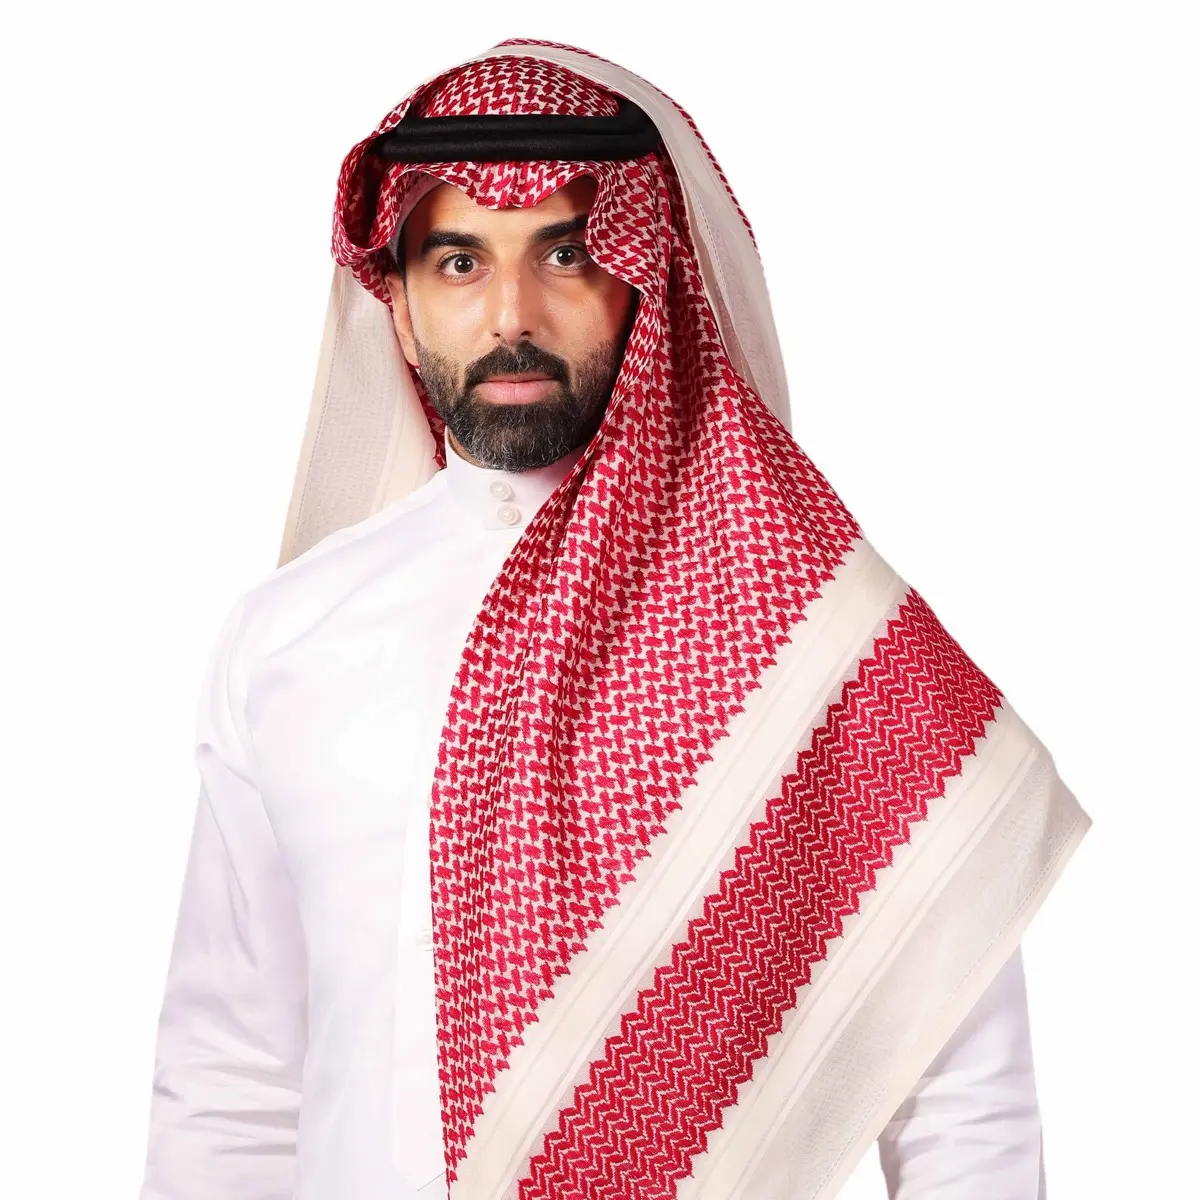 Vente en gros de foulard arabe de luxe musulman islamique saoudien Dubaï payé Shemagh Keffieh foulard turban perlé